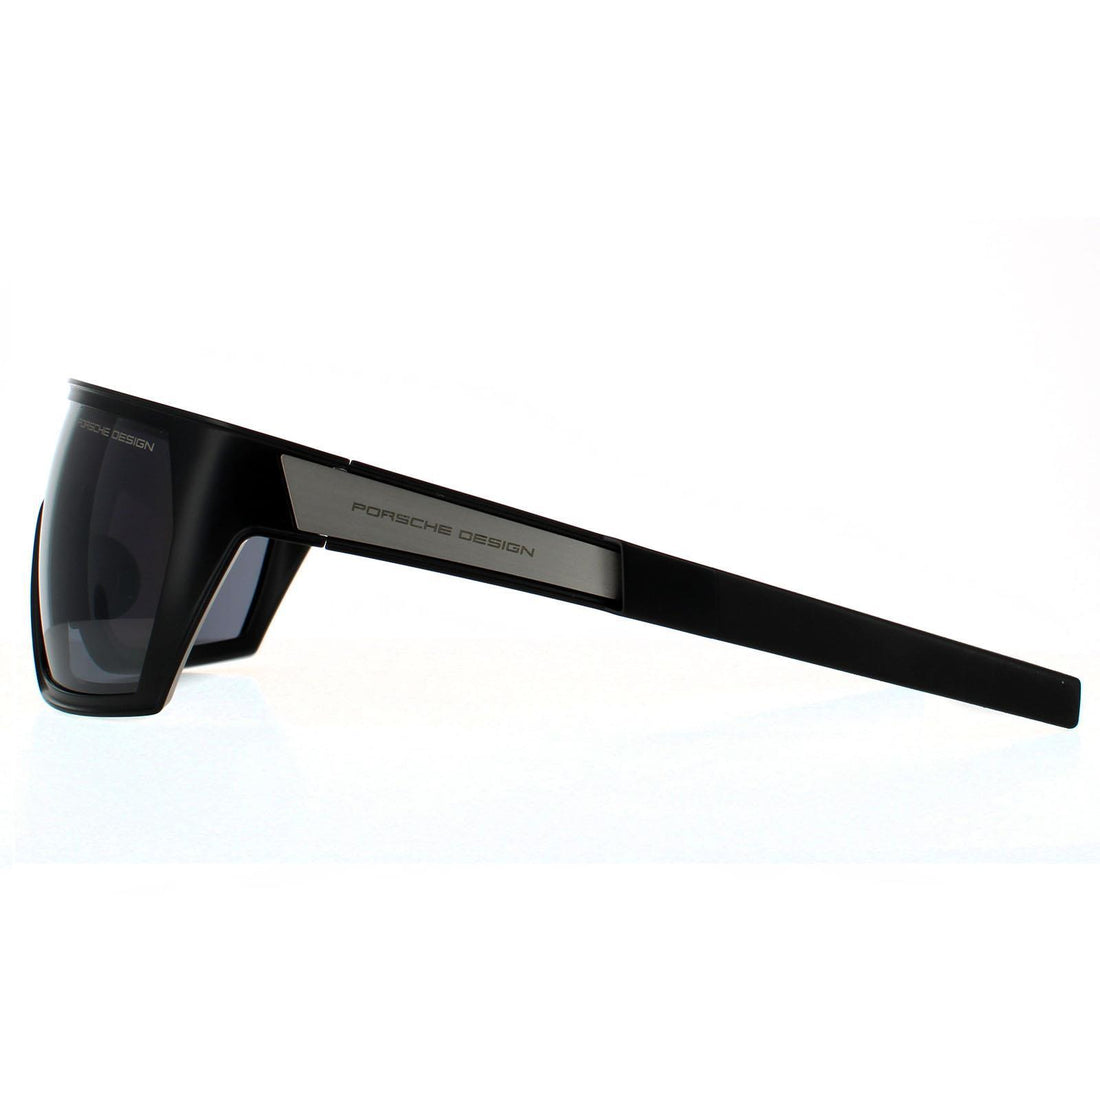 Porsche Design P8668 Sunglasses